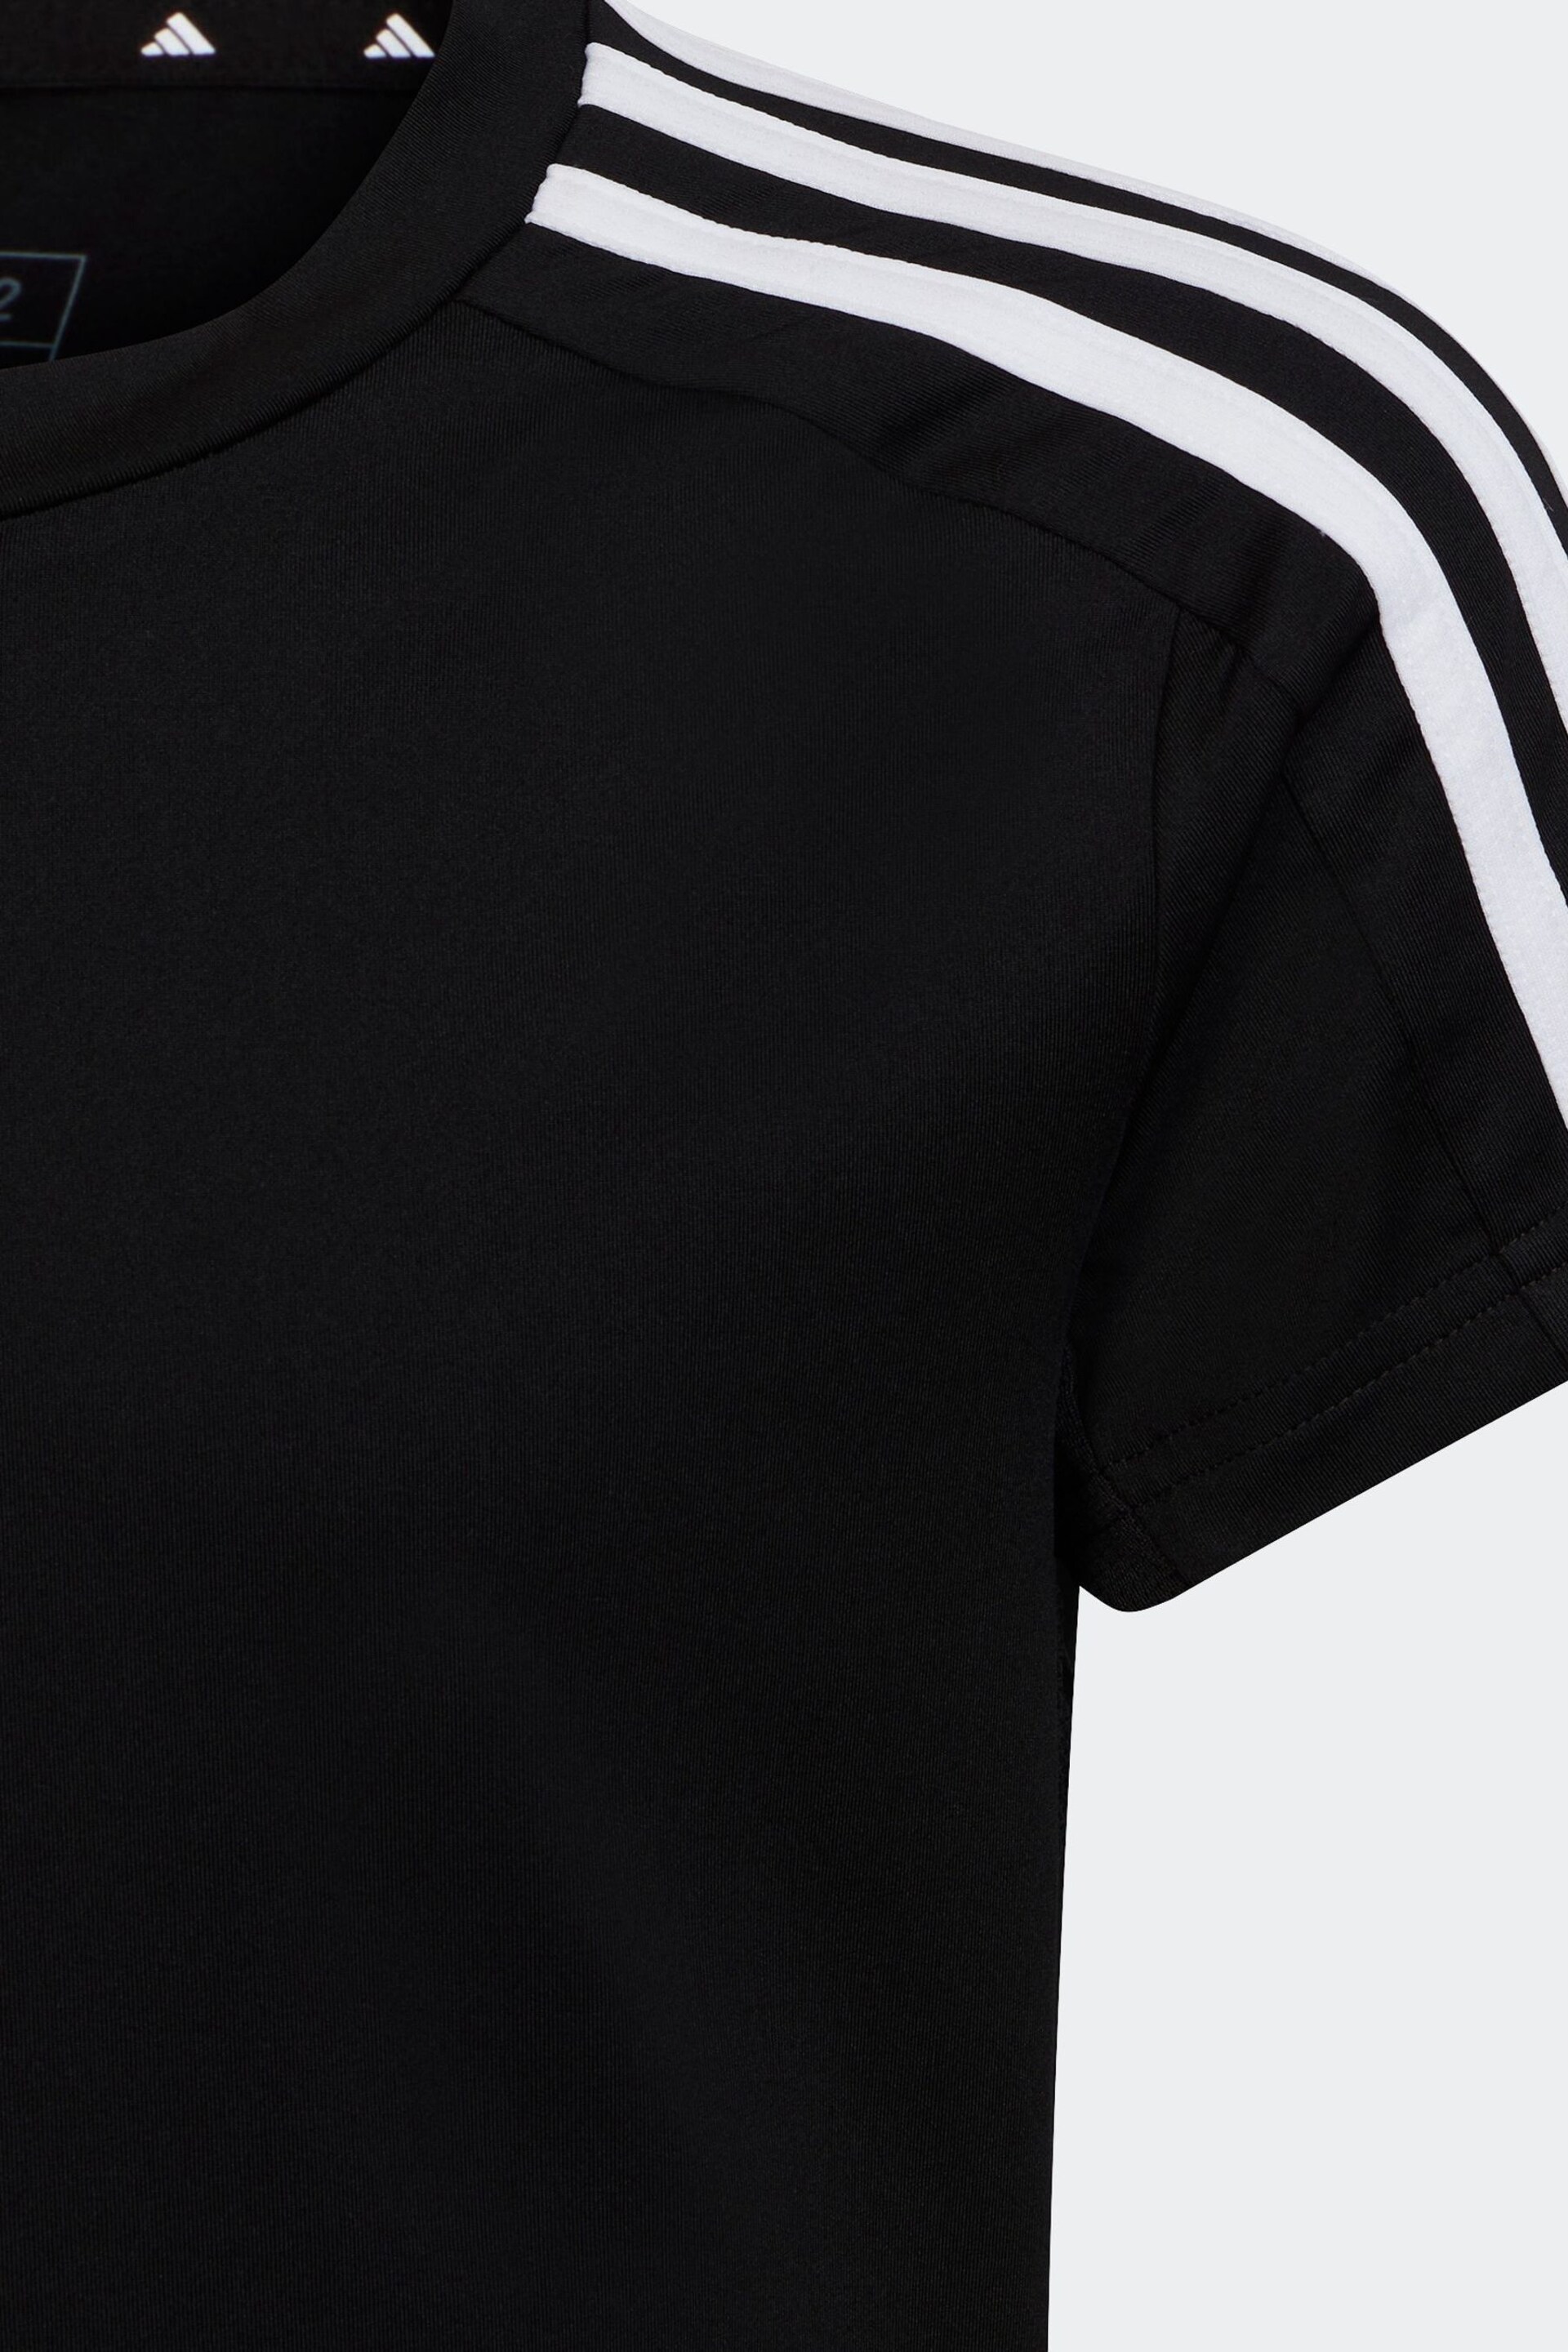 adidas Black Sportswear Train Essentials Aeroready 3-Stripes Slim-Fit Training T-Shirt - Image 6 of 8